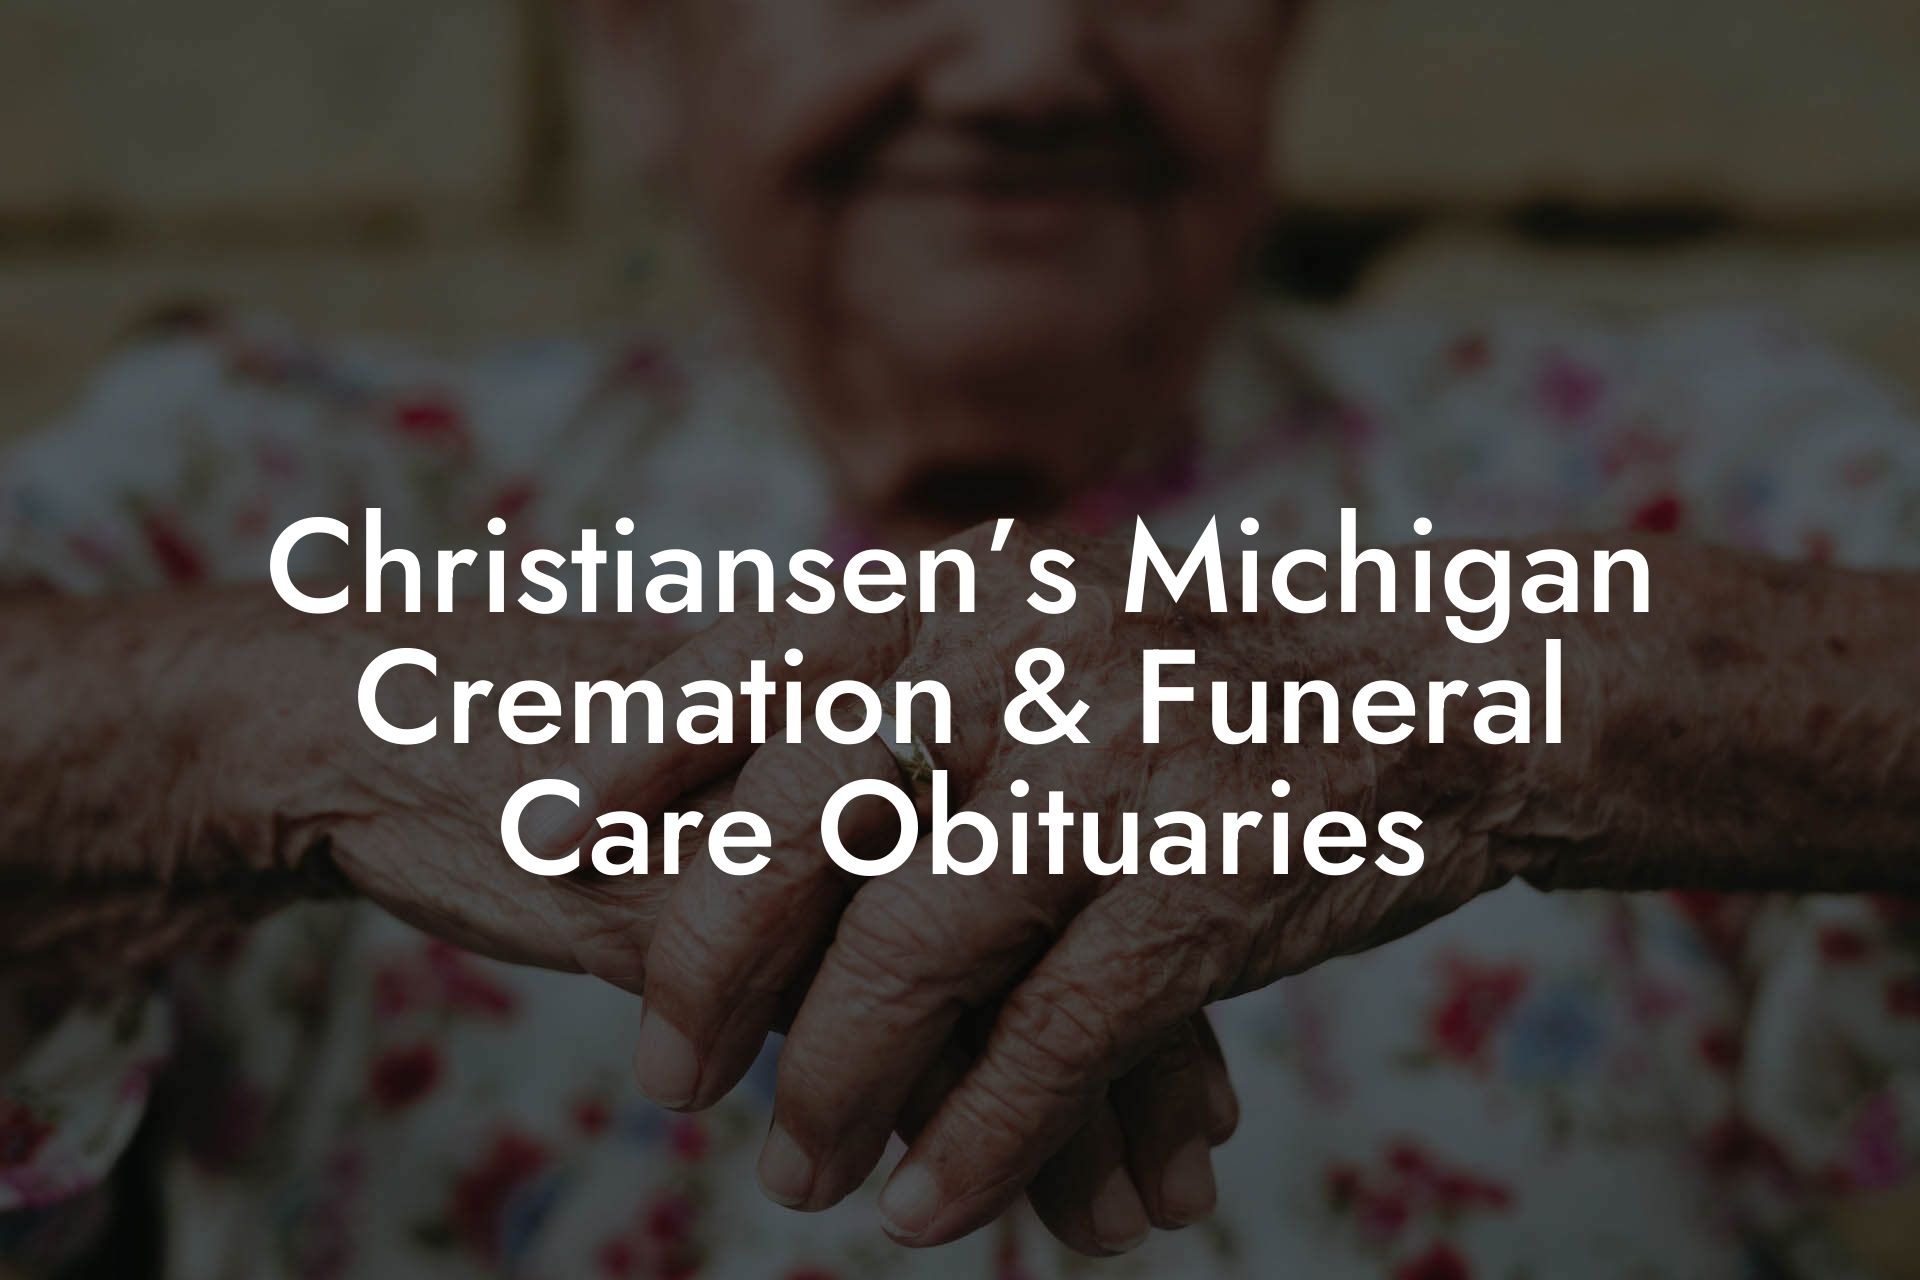 Christiansen’s Michigan Cremation & Funeral Care Obituaries